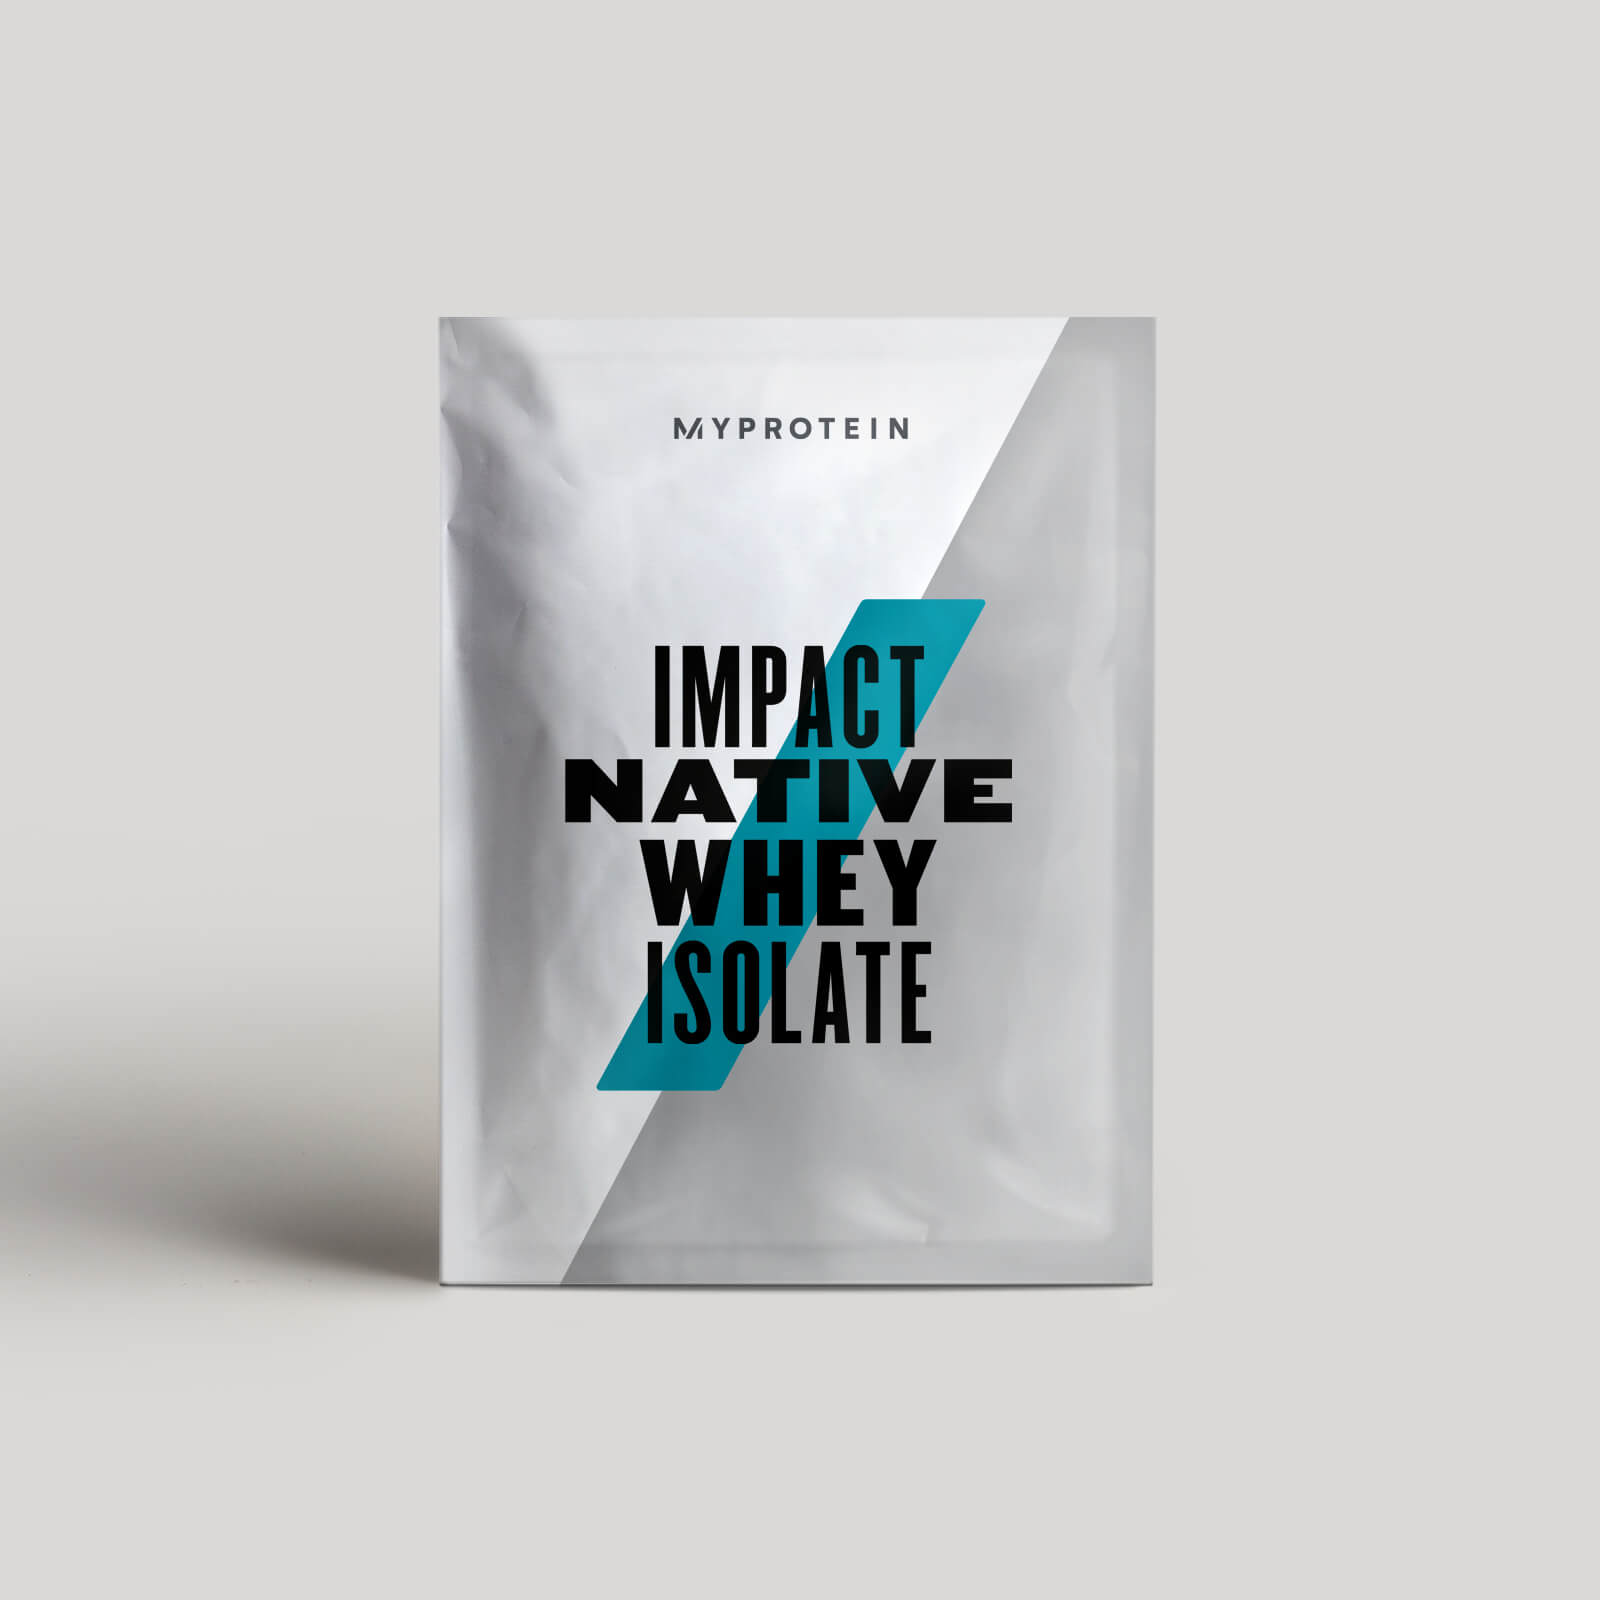 Impact Native Whey Isolate (Sample) - 25g - Natural Chocolate